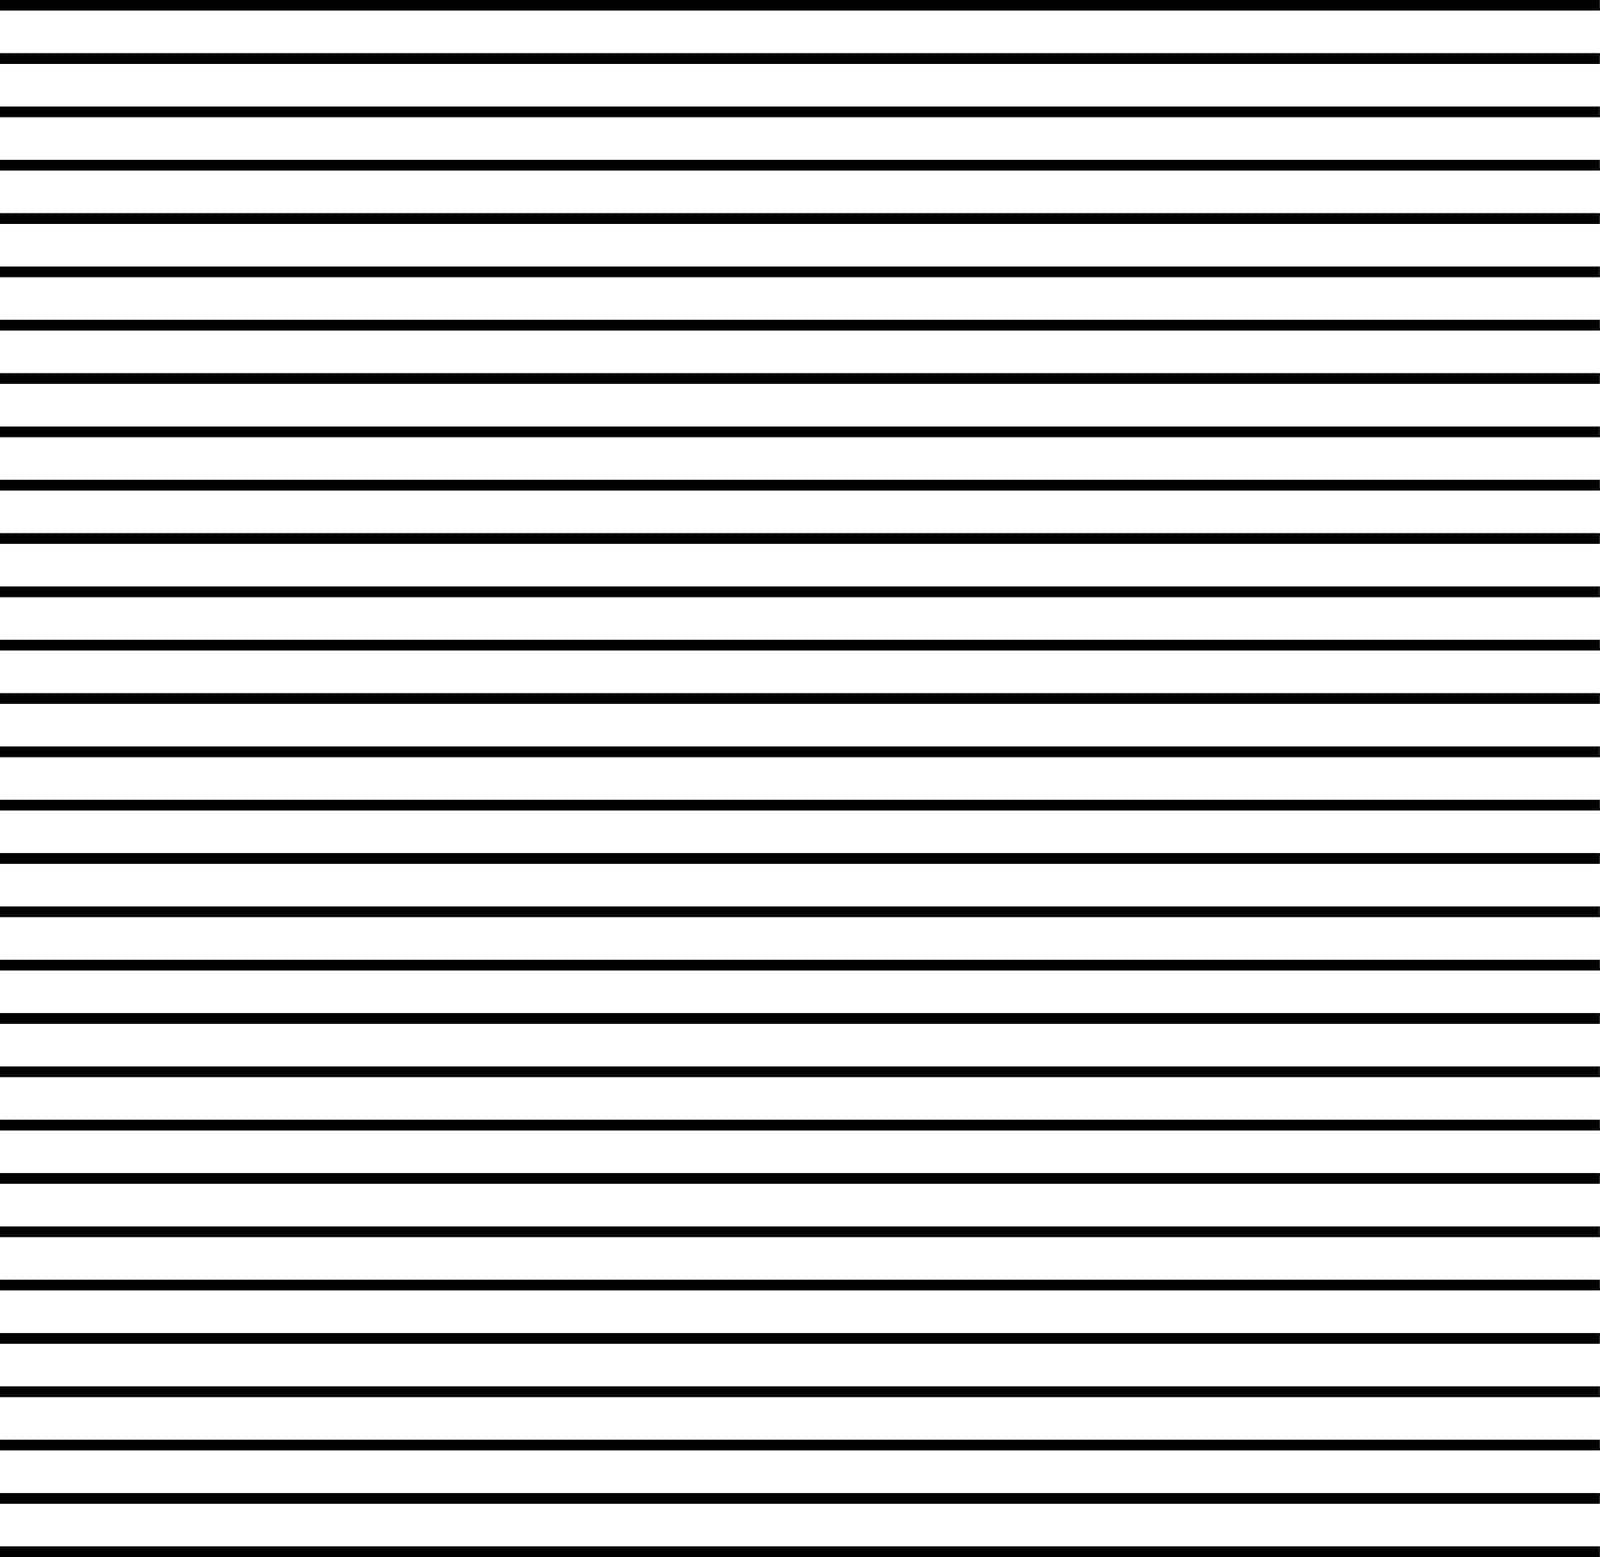 Backgrounds, horizontal lines stripes different thickness intensity, horizontal stripe design by koksikoks